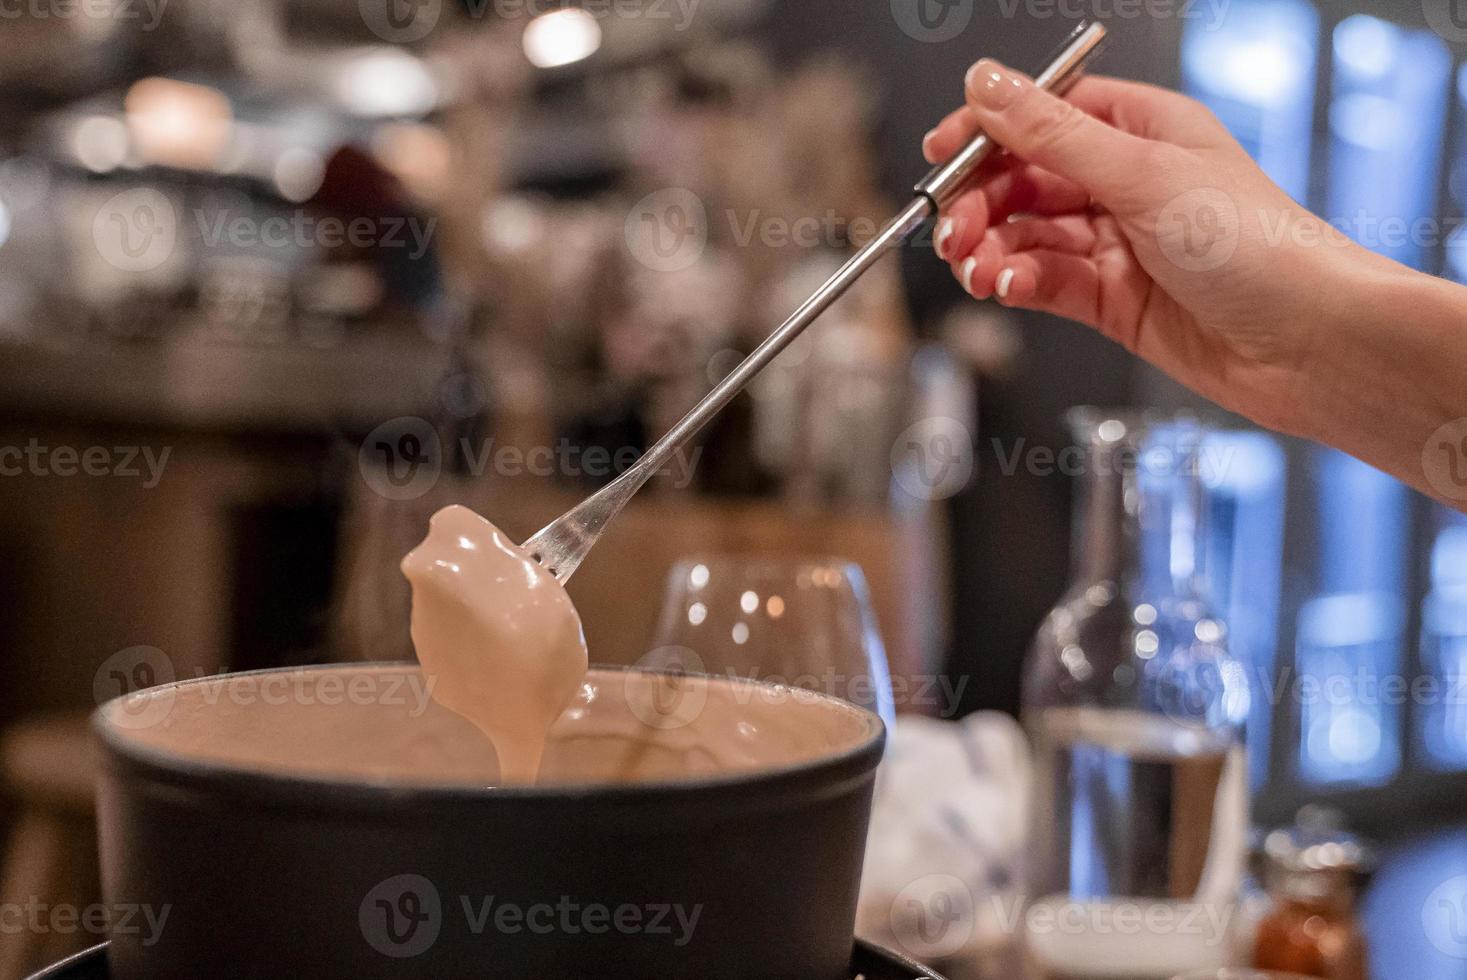 kvinnlig turist doppa mat i ostfondue vid bordet i restaurangen foto